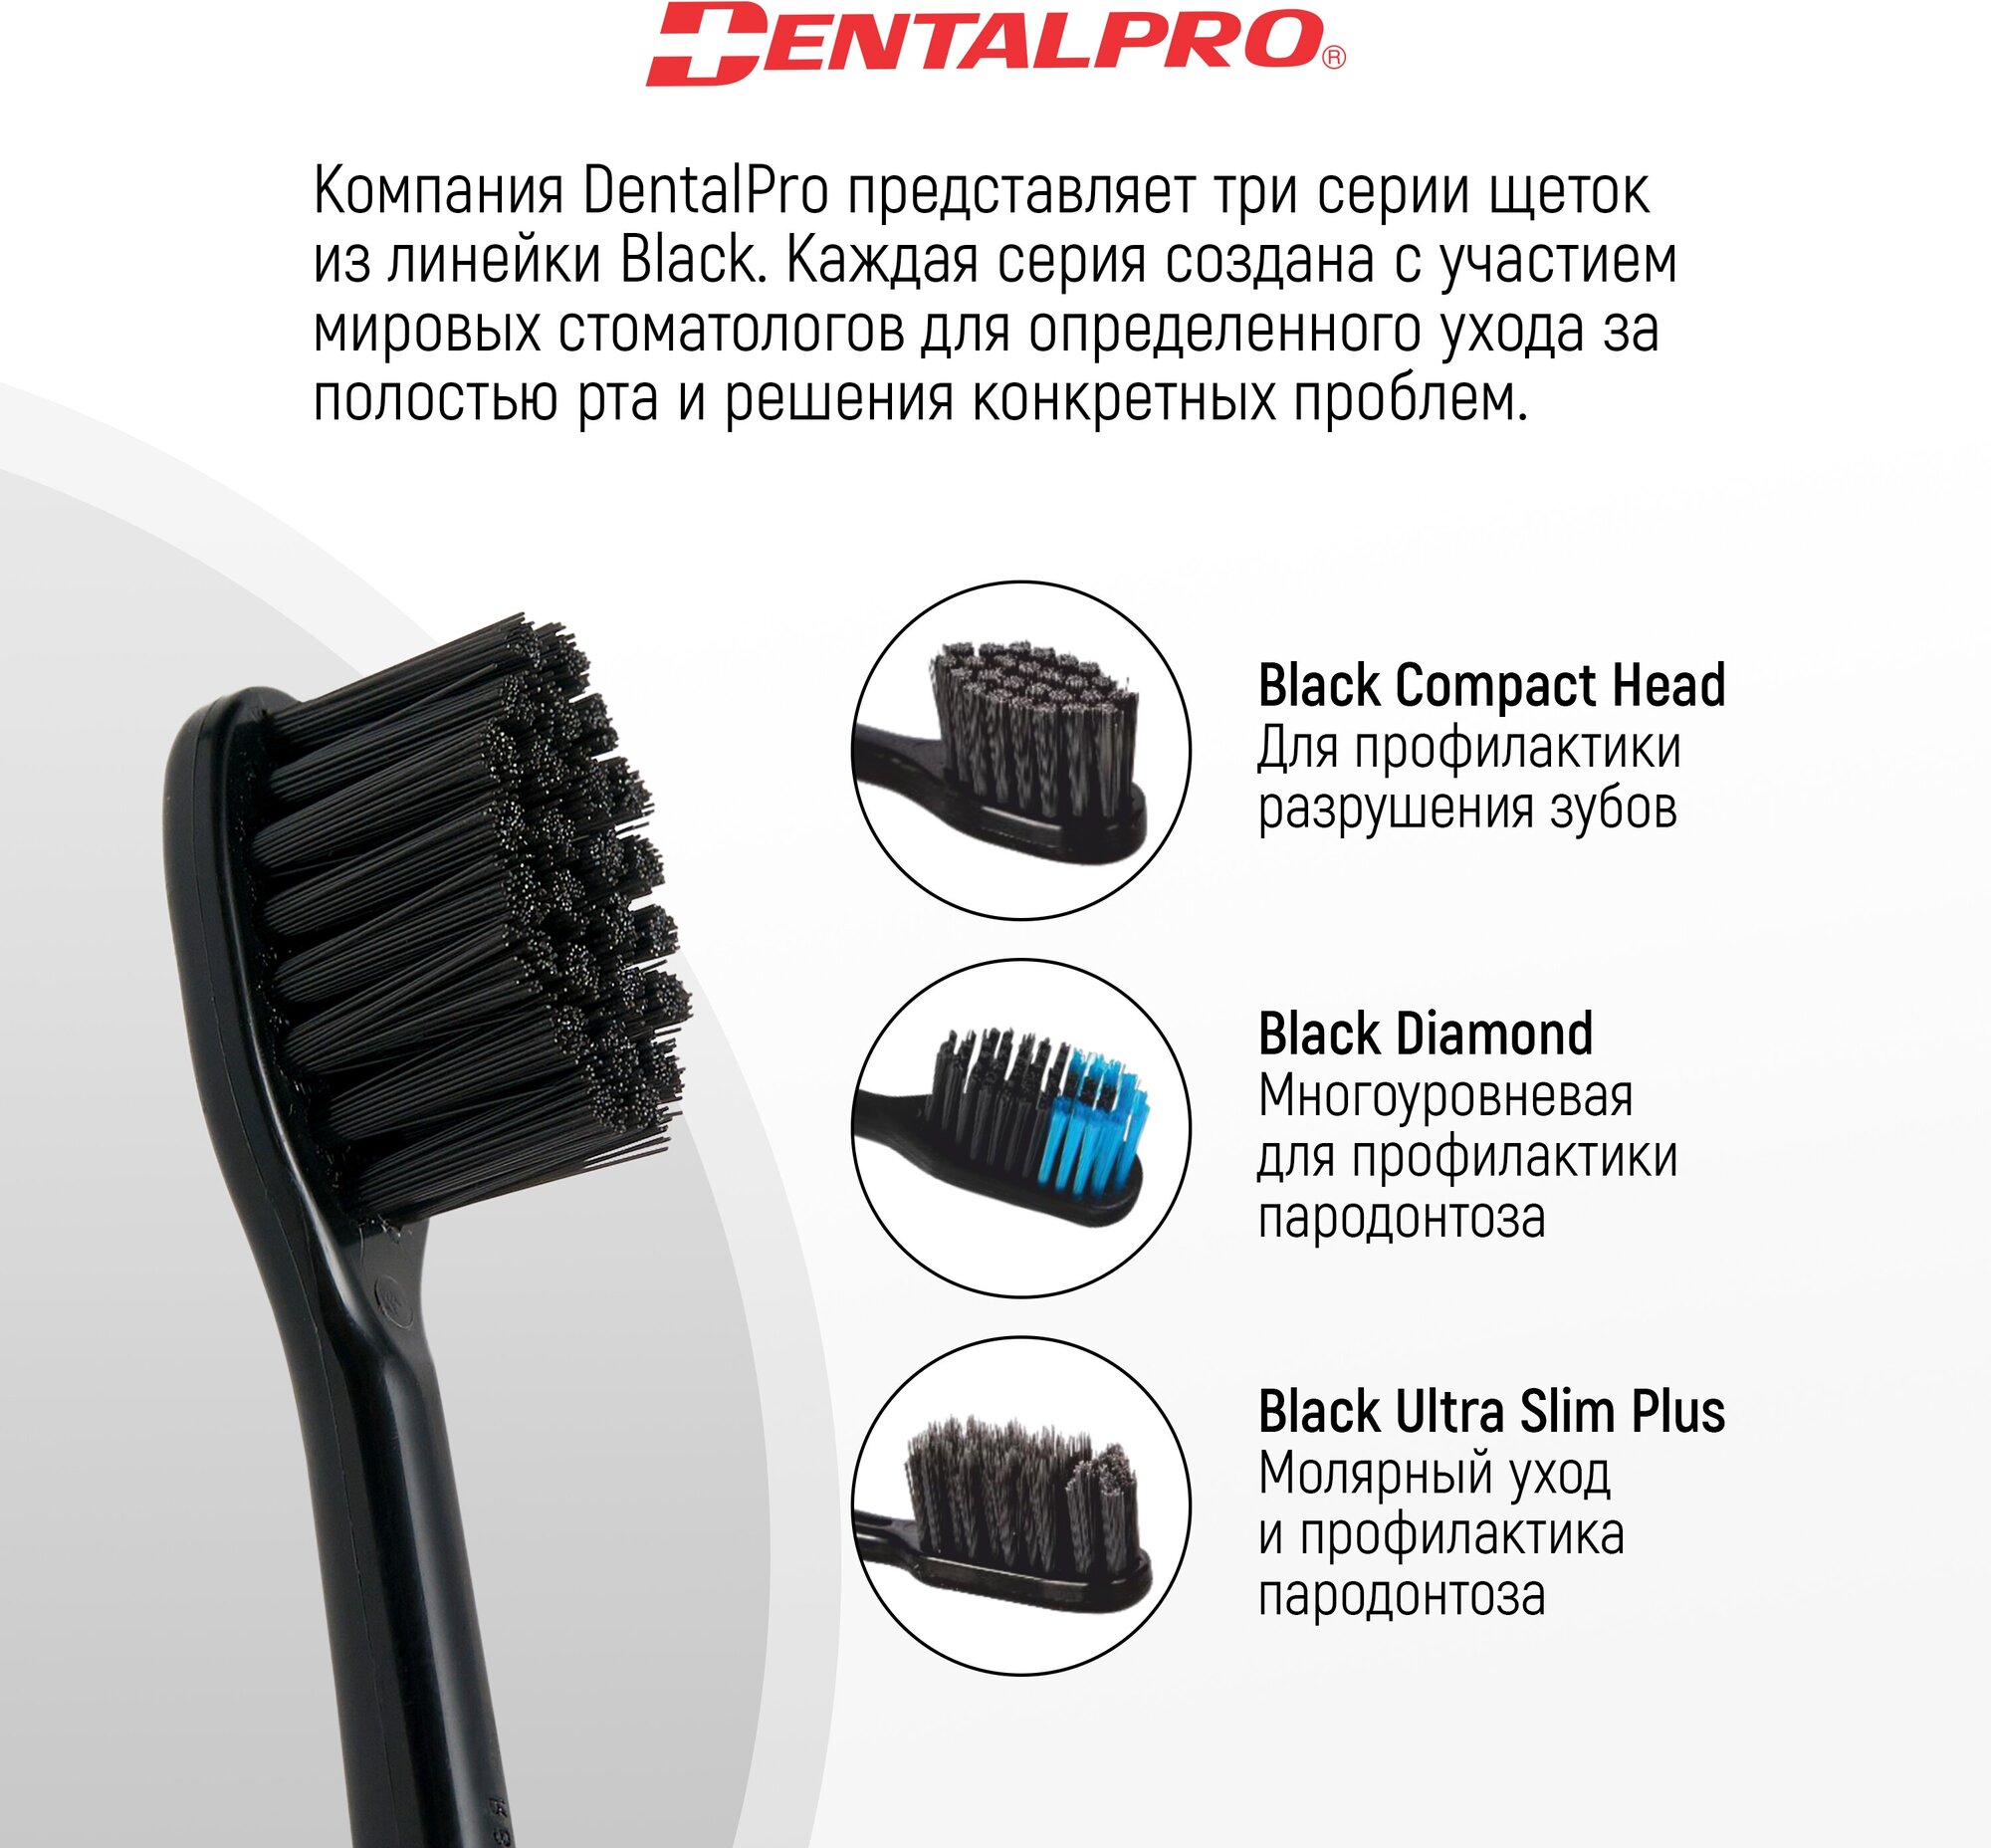 Зубная щетка DentalPro Black Compact Head средняя - фото №12